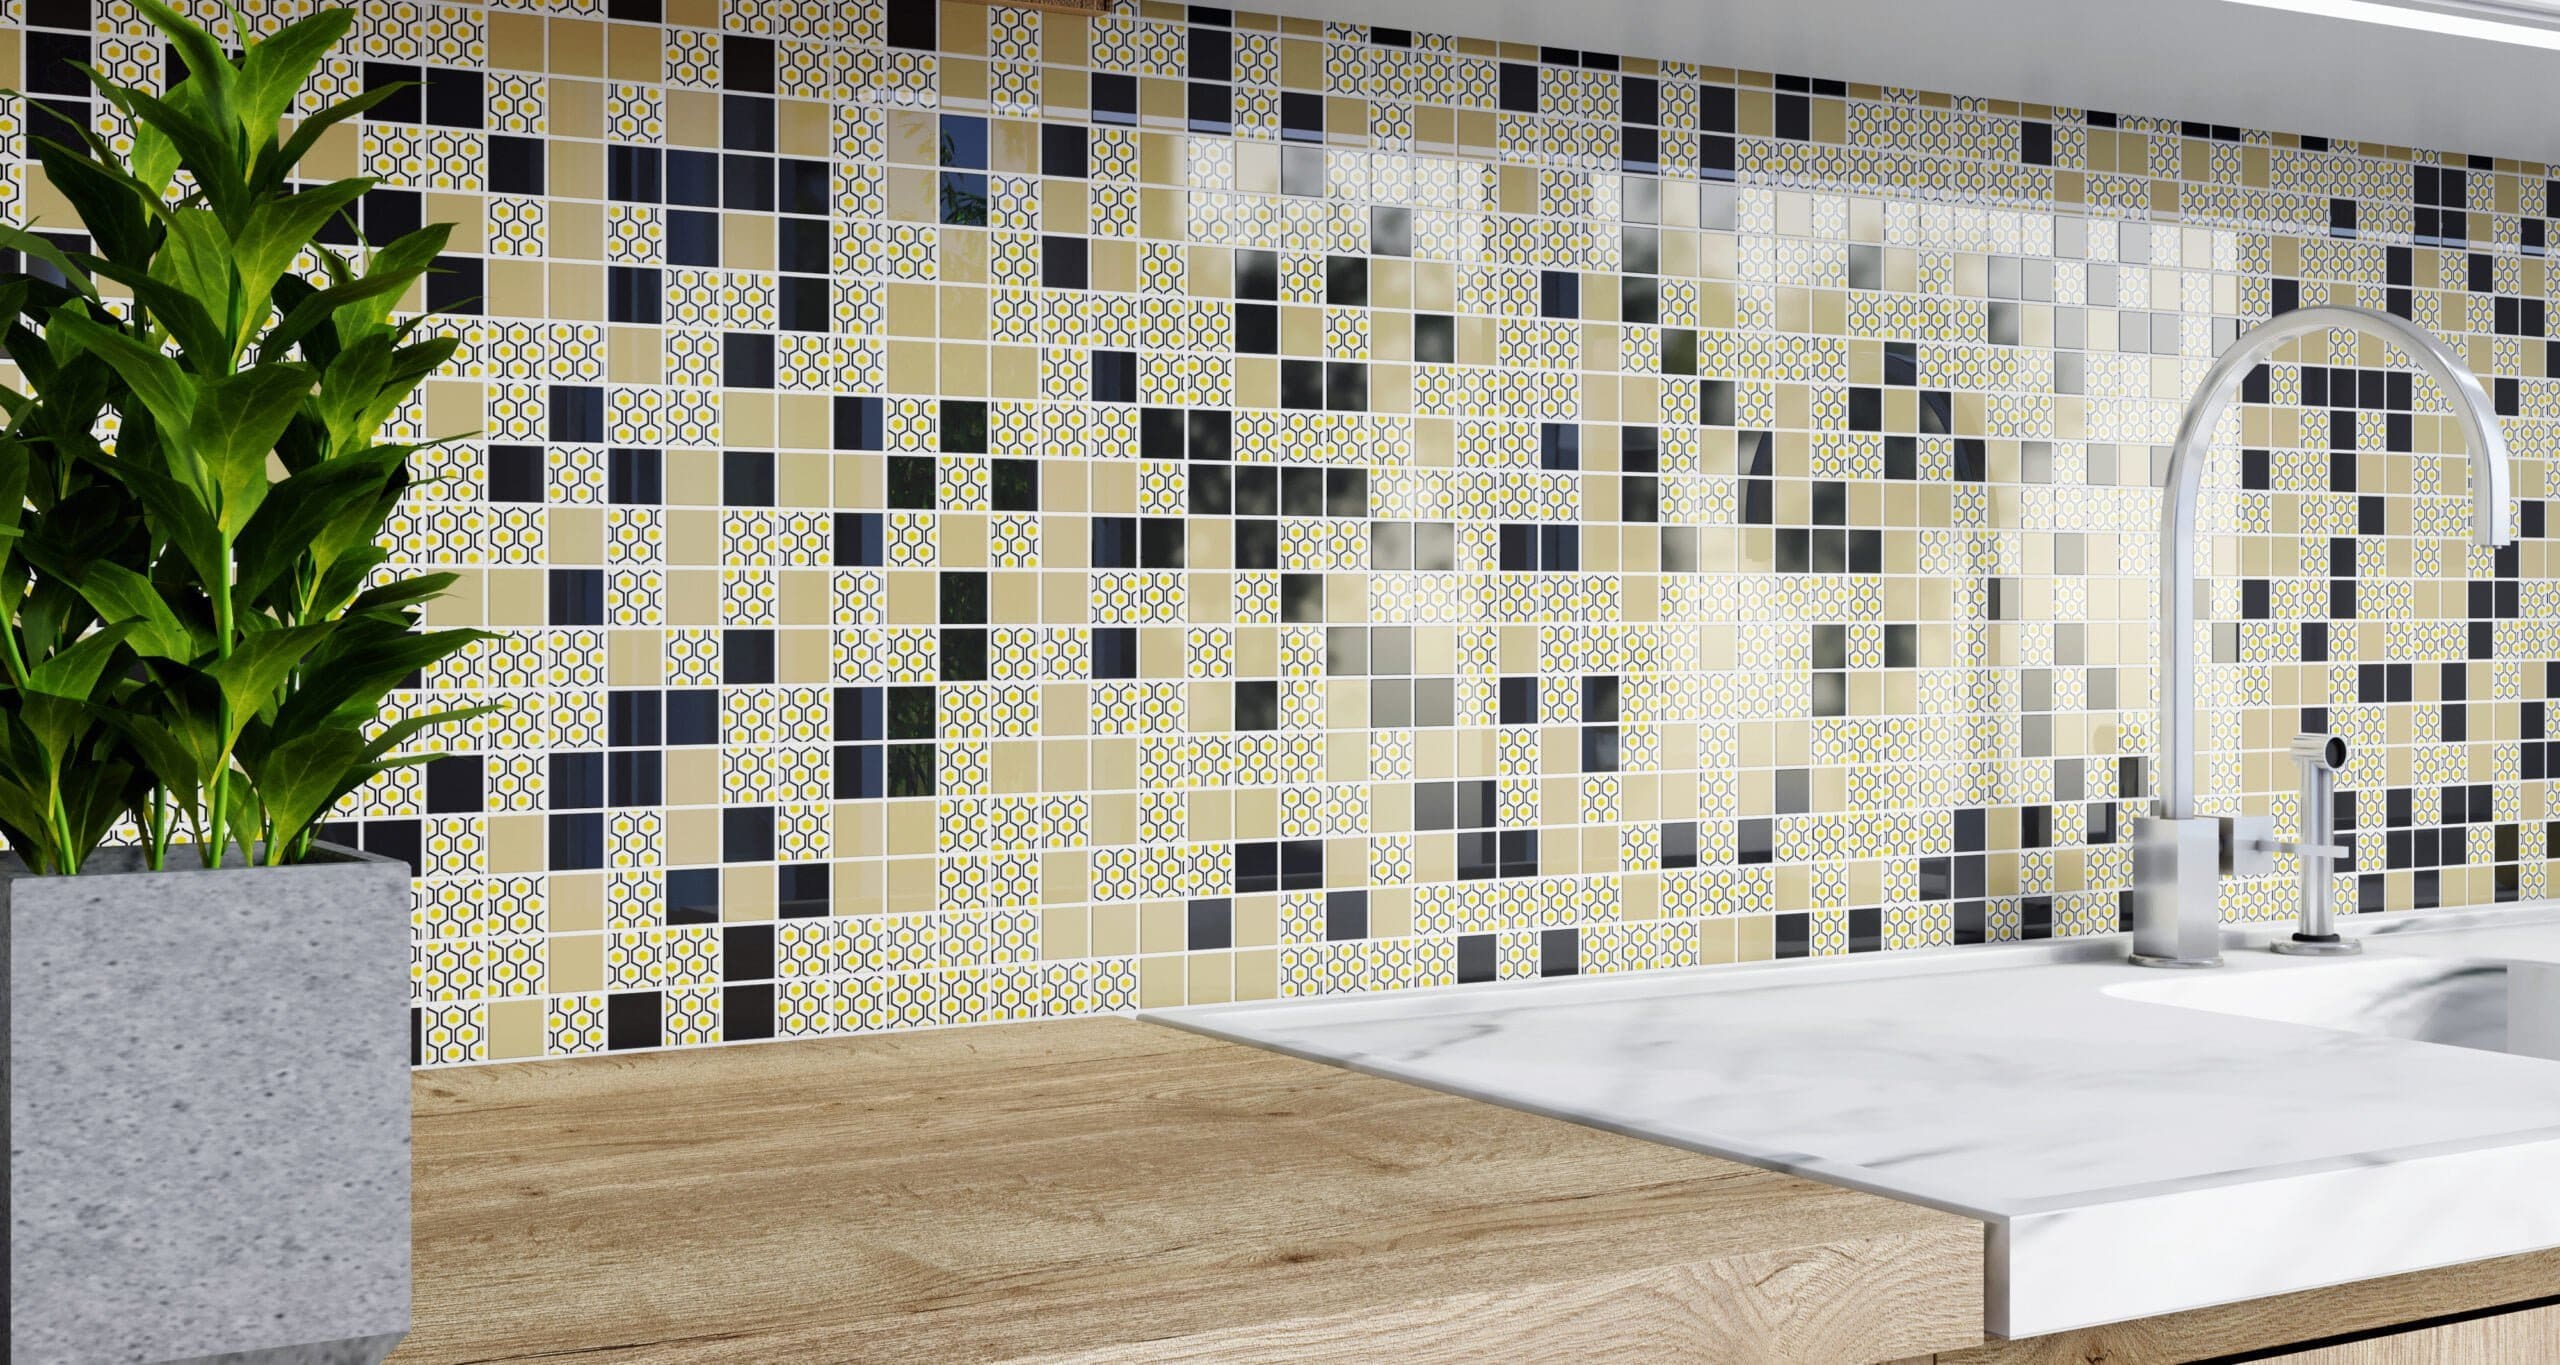 Mosaic backsplash decor in modern kitchen